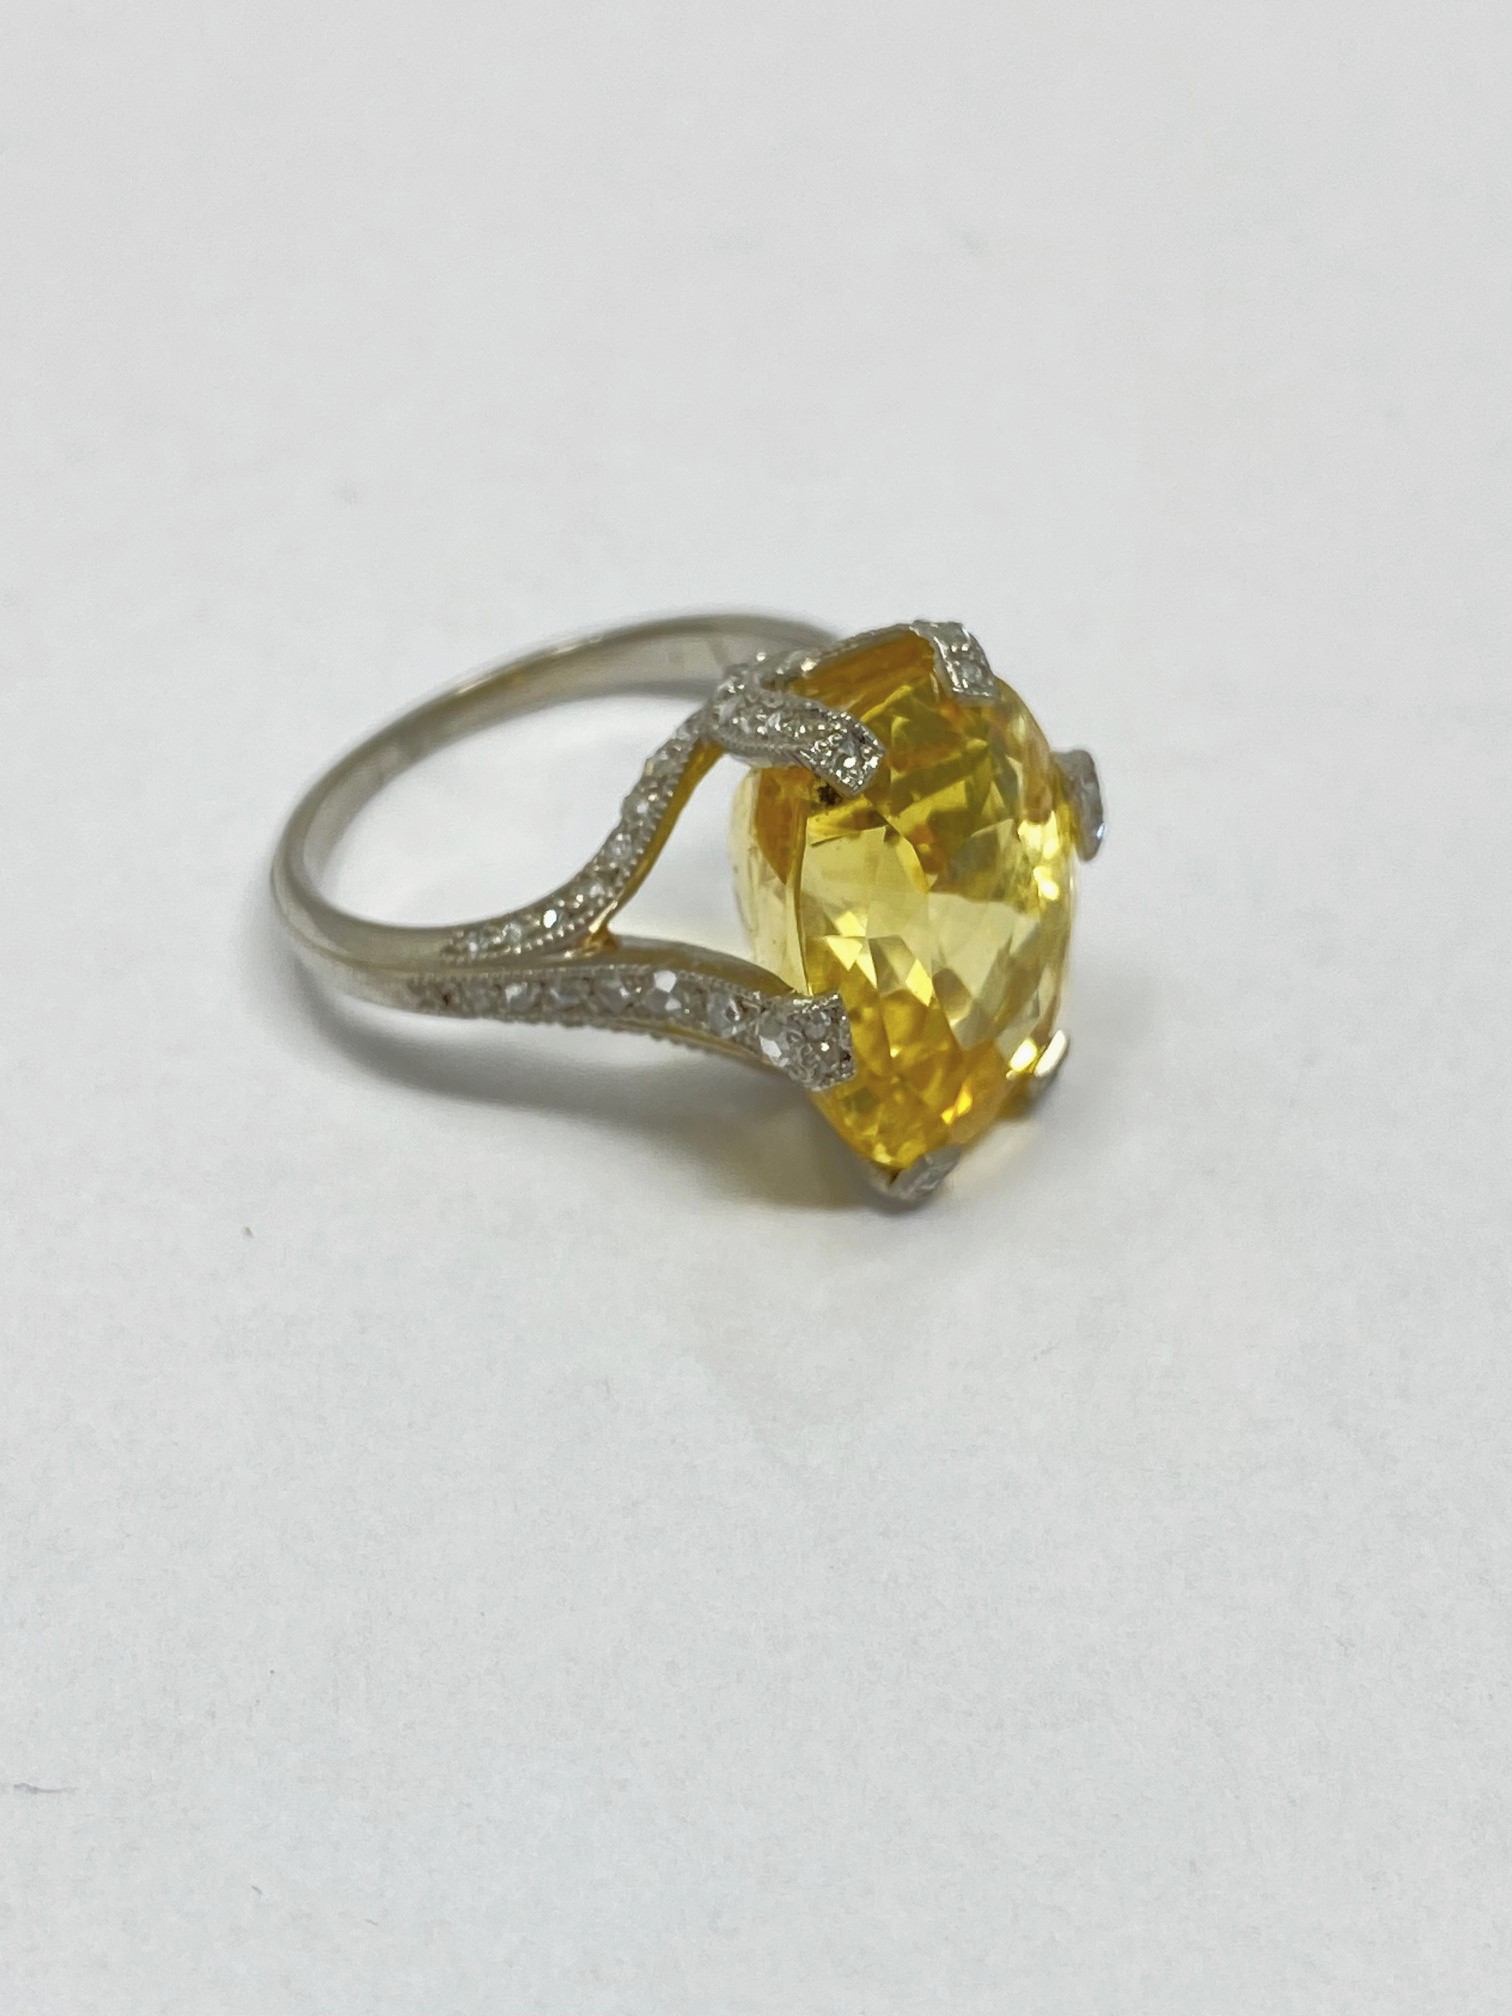 YELLOW SAPPHIRE AND DIAMOND RING - Image 5 of 6